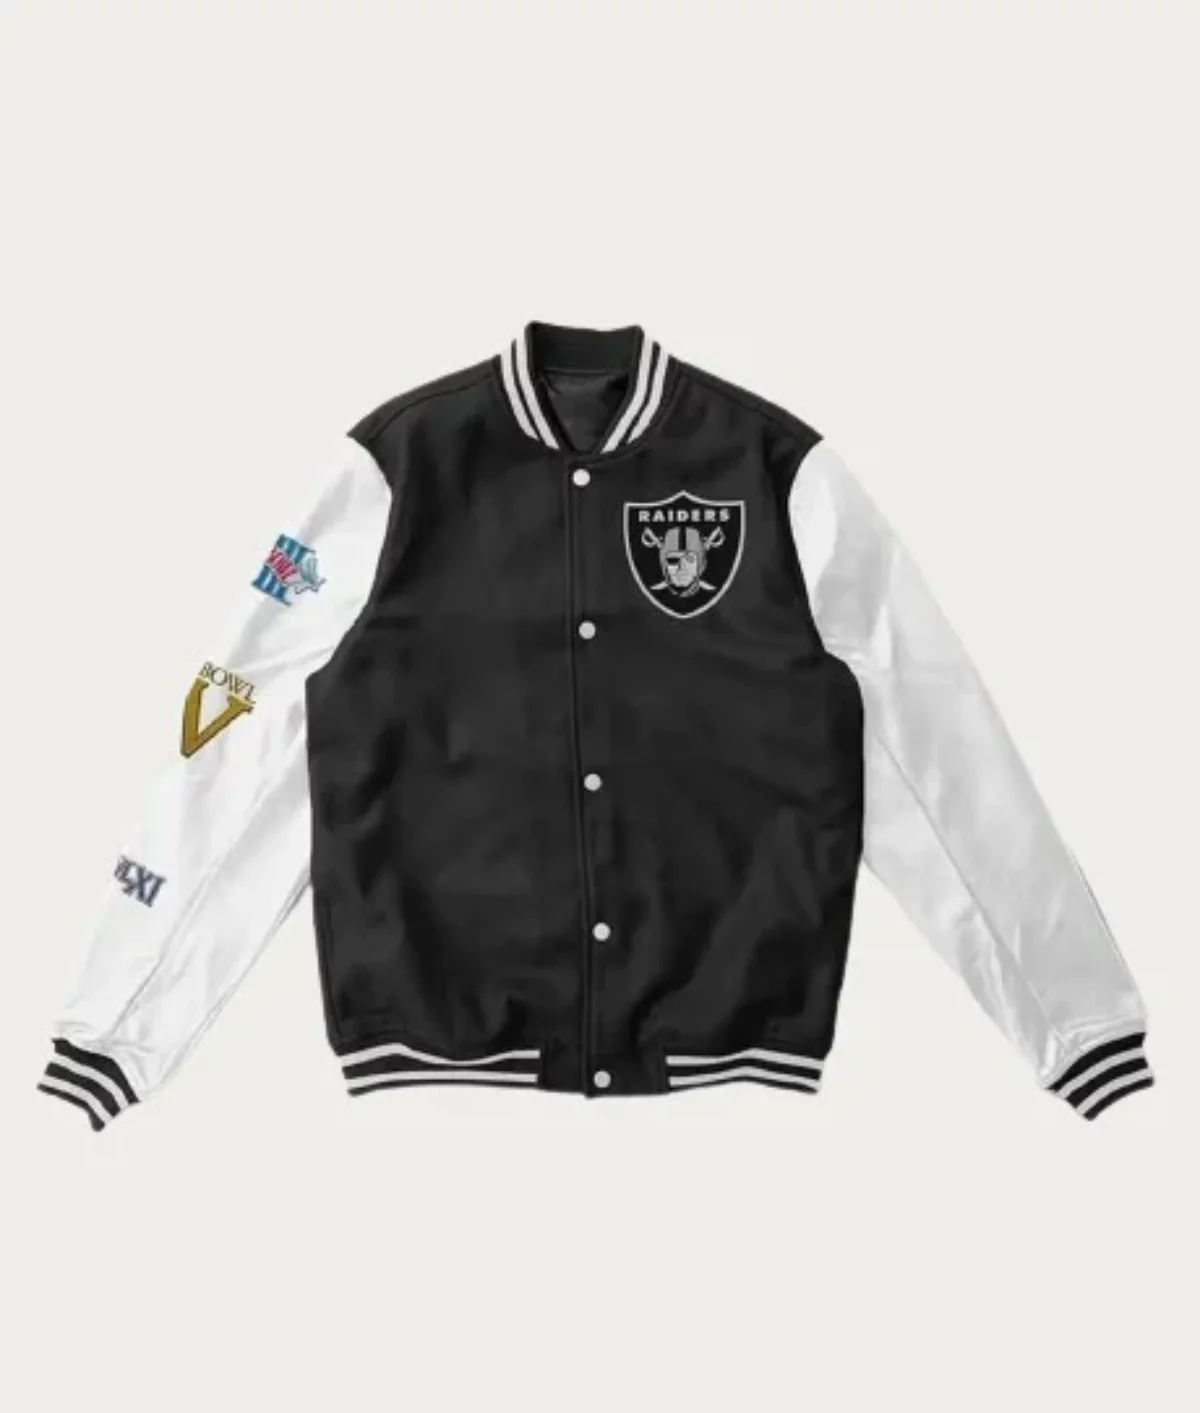 Thegenuineleather NFL Raiders Big Logo Jacket - Silver